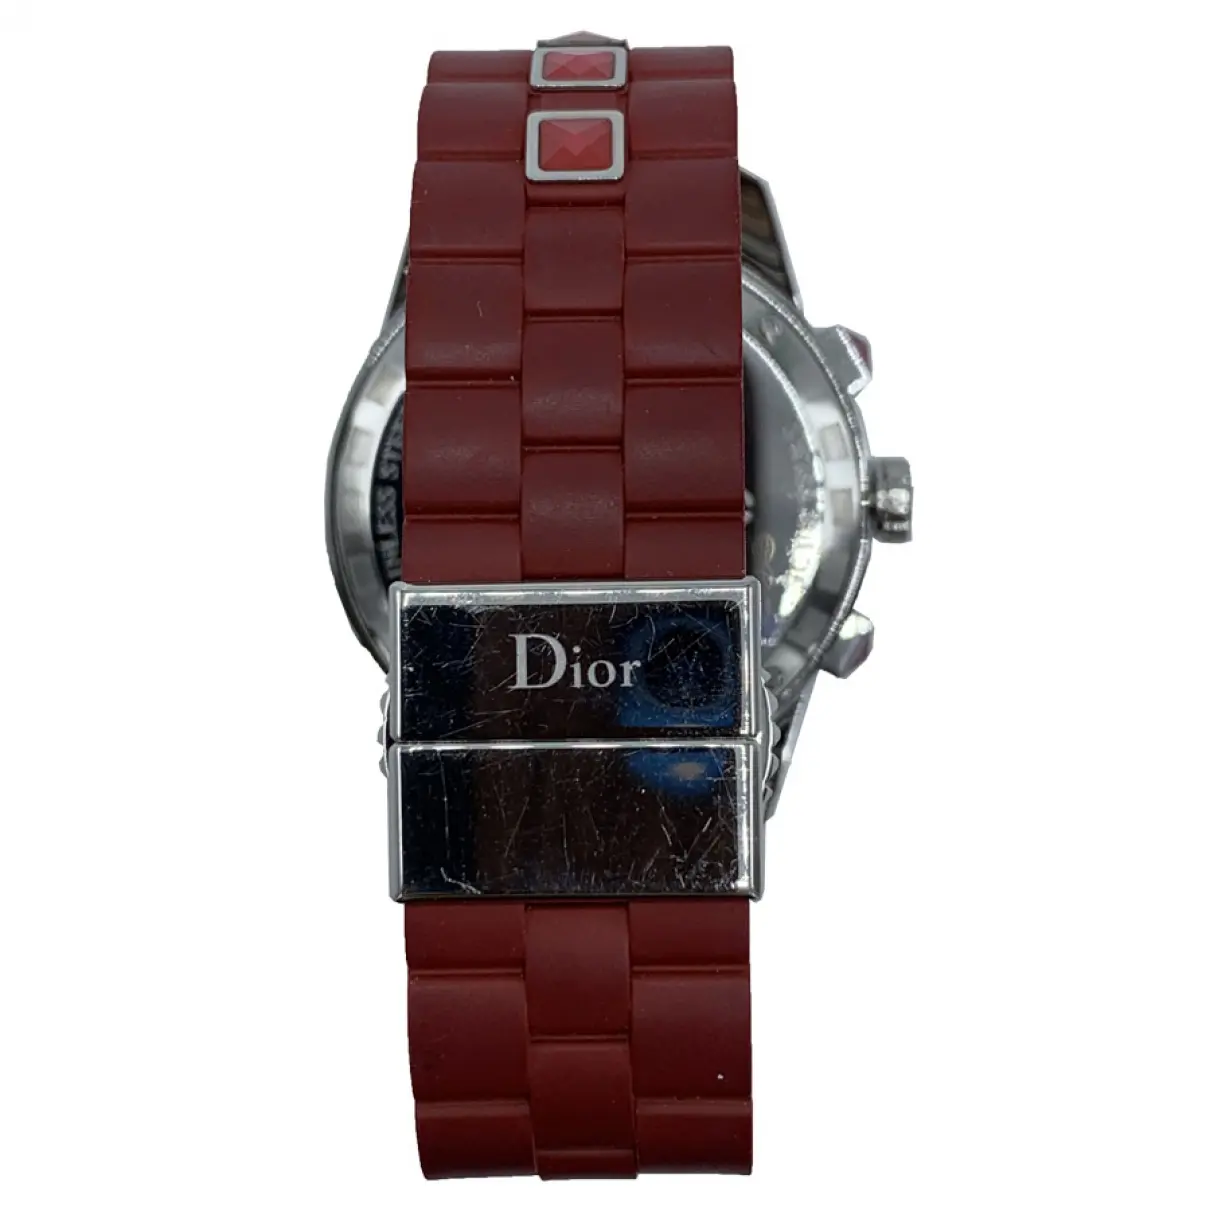 Buy Dior Christal Chronographe watch online